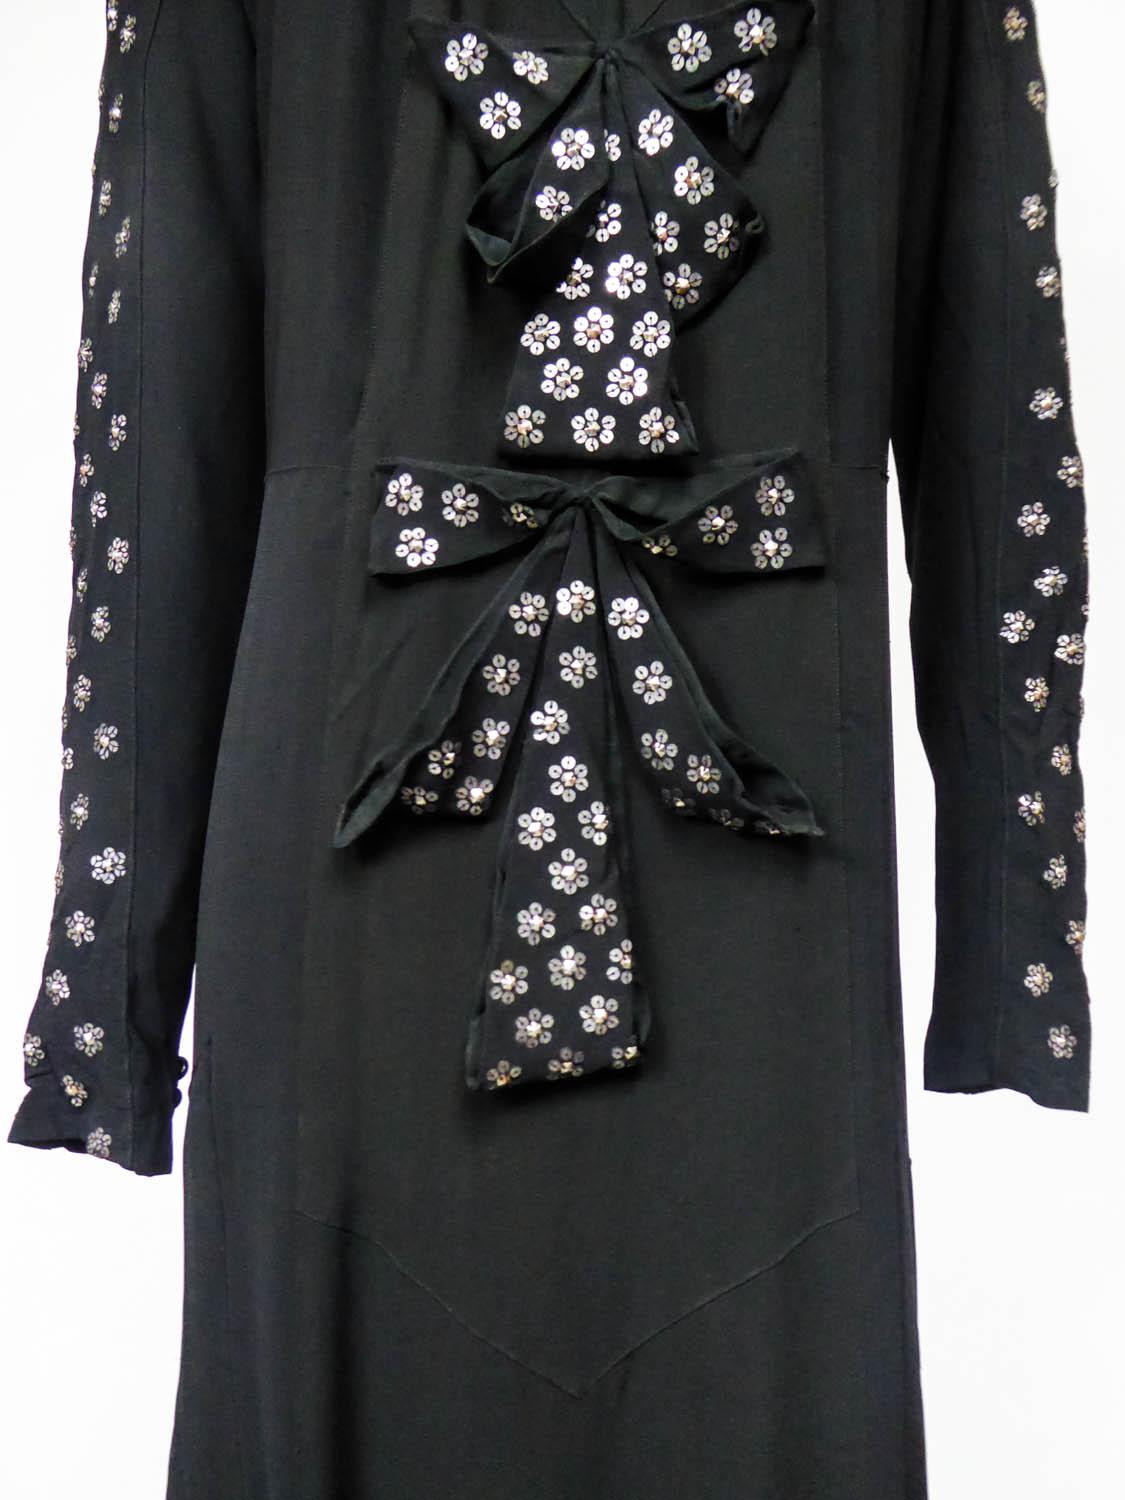 Agnès Drecoll Haute Couture Evening Dress Circa 1932 France 5